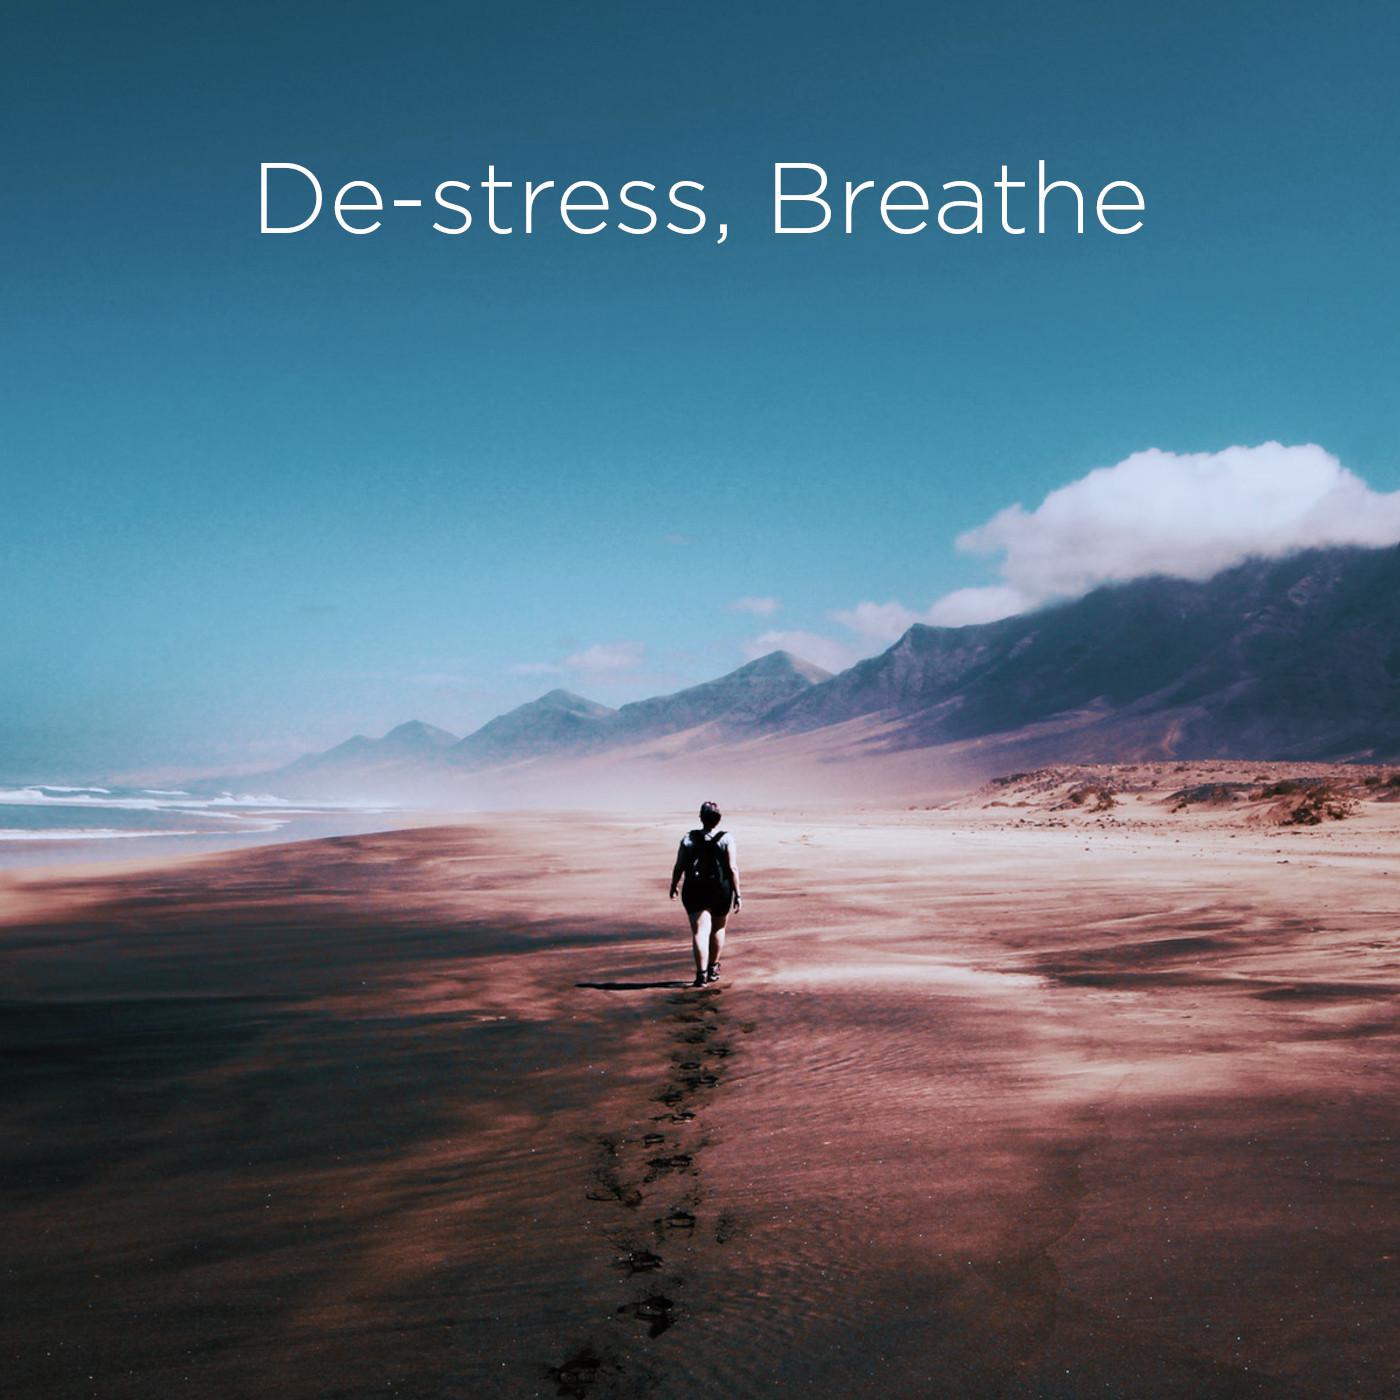 De-stress and Breathe